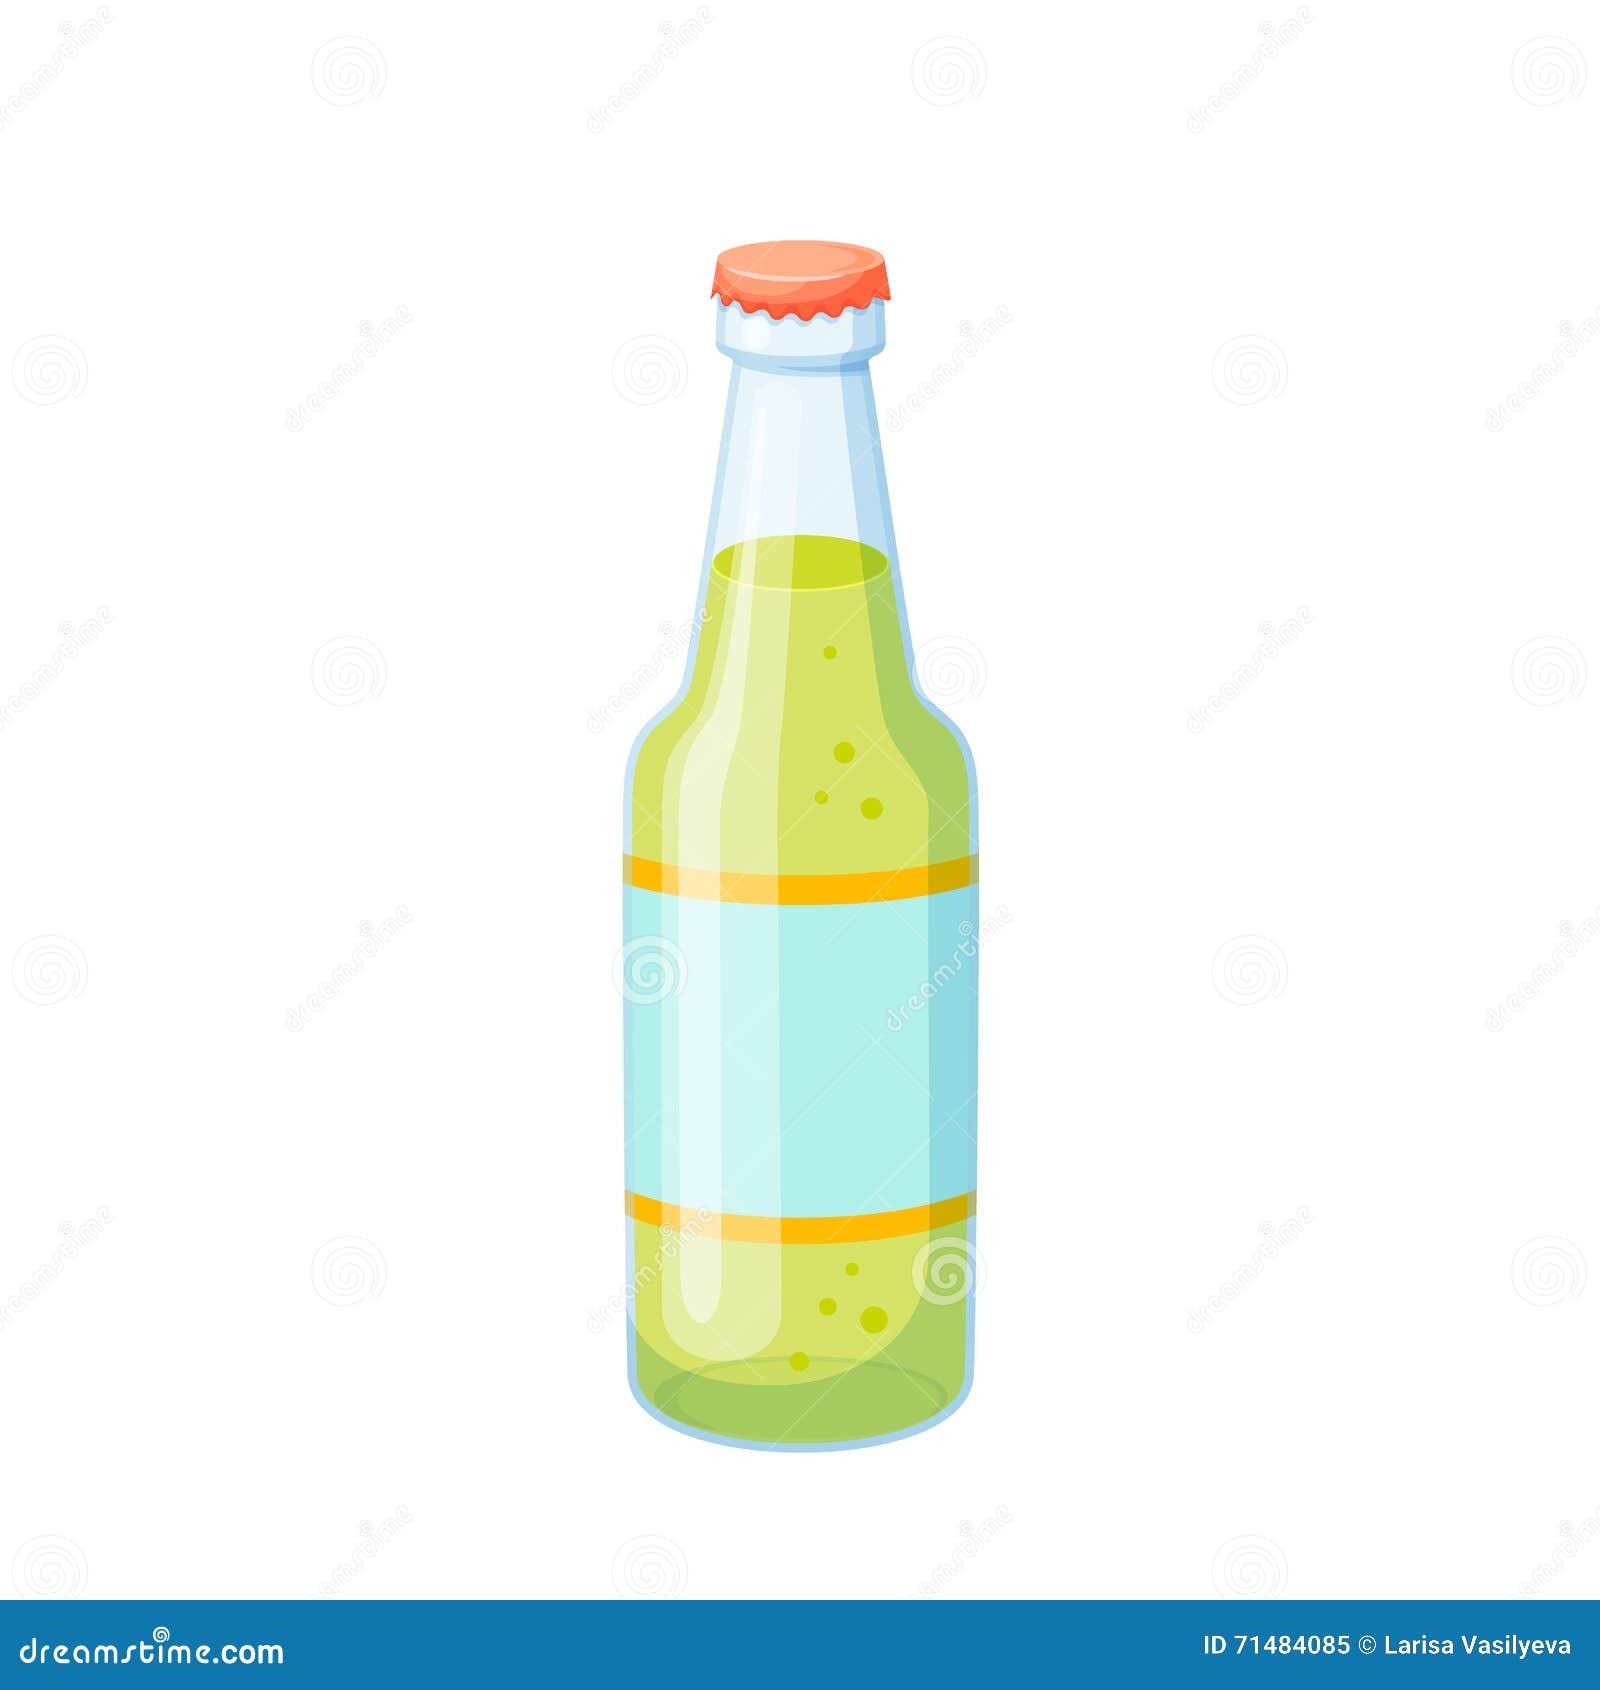 https://thumbs.dreamstime.com/z/drinks-glass-bottle-soda-soda-vector-illustration-beverage-packaging-soda-cola-water-beer-soft-design-71484085.jpg